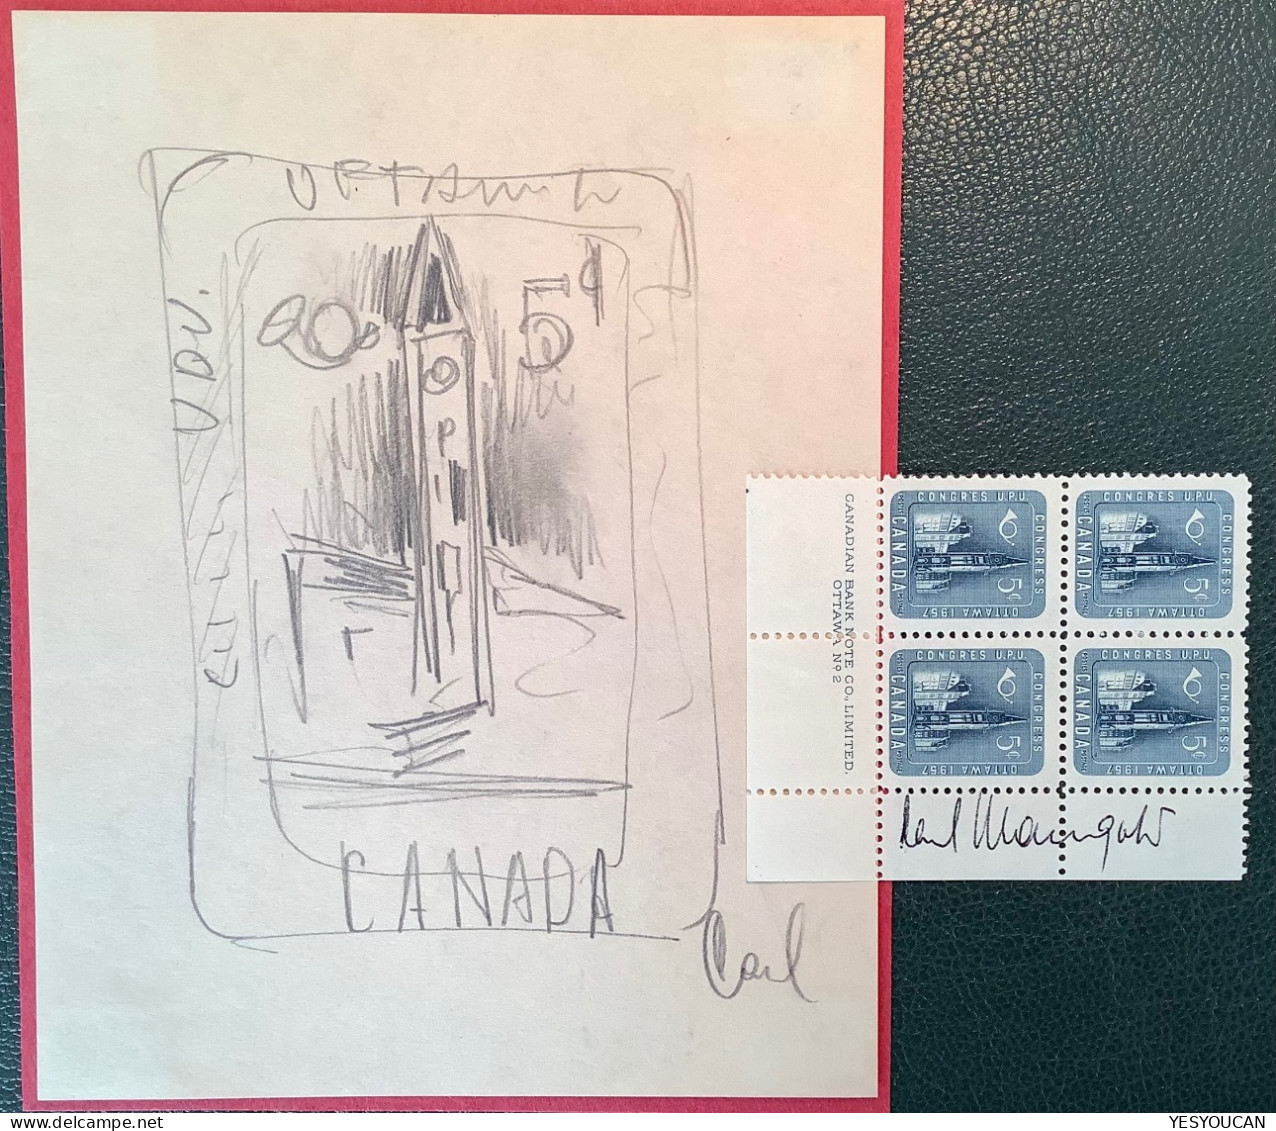 Canada Hand-drawn Essay 5c UPU CONGRESS OTTAWA 1957 Signed By Artist + Stamp, Ex Severin UPU Coll. Corinphila2012 (Proof - Ongebruikt